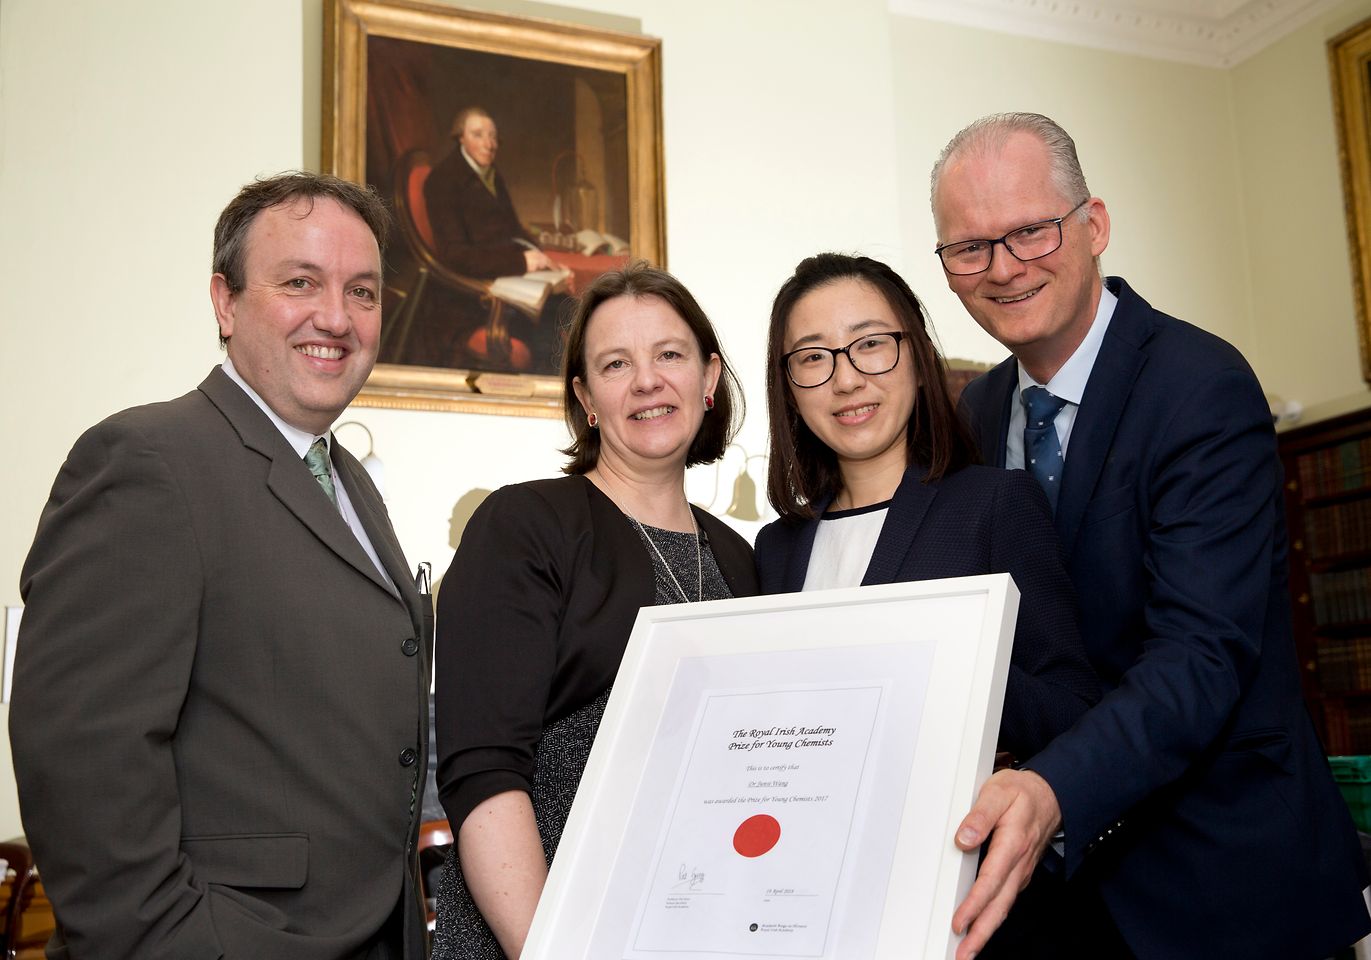 Dr. Junsi Wang, Ph.D. Chemistry graduate of Trinity College Dublin, has won the Royal Irish Academy’s Young Chemist Prize 2017.